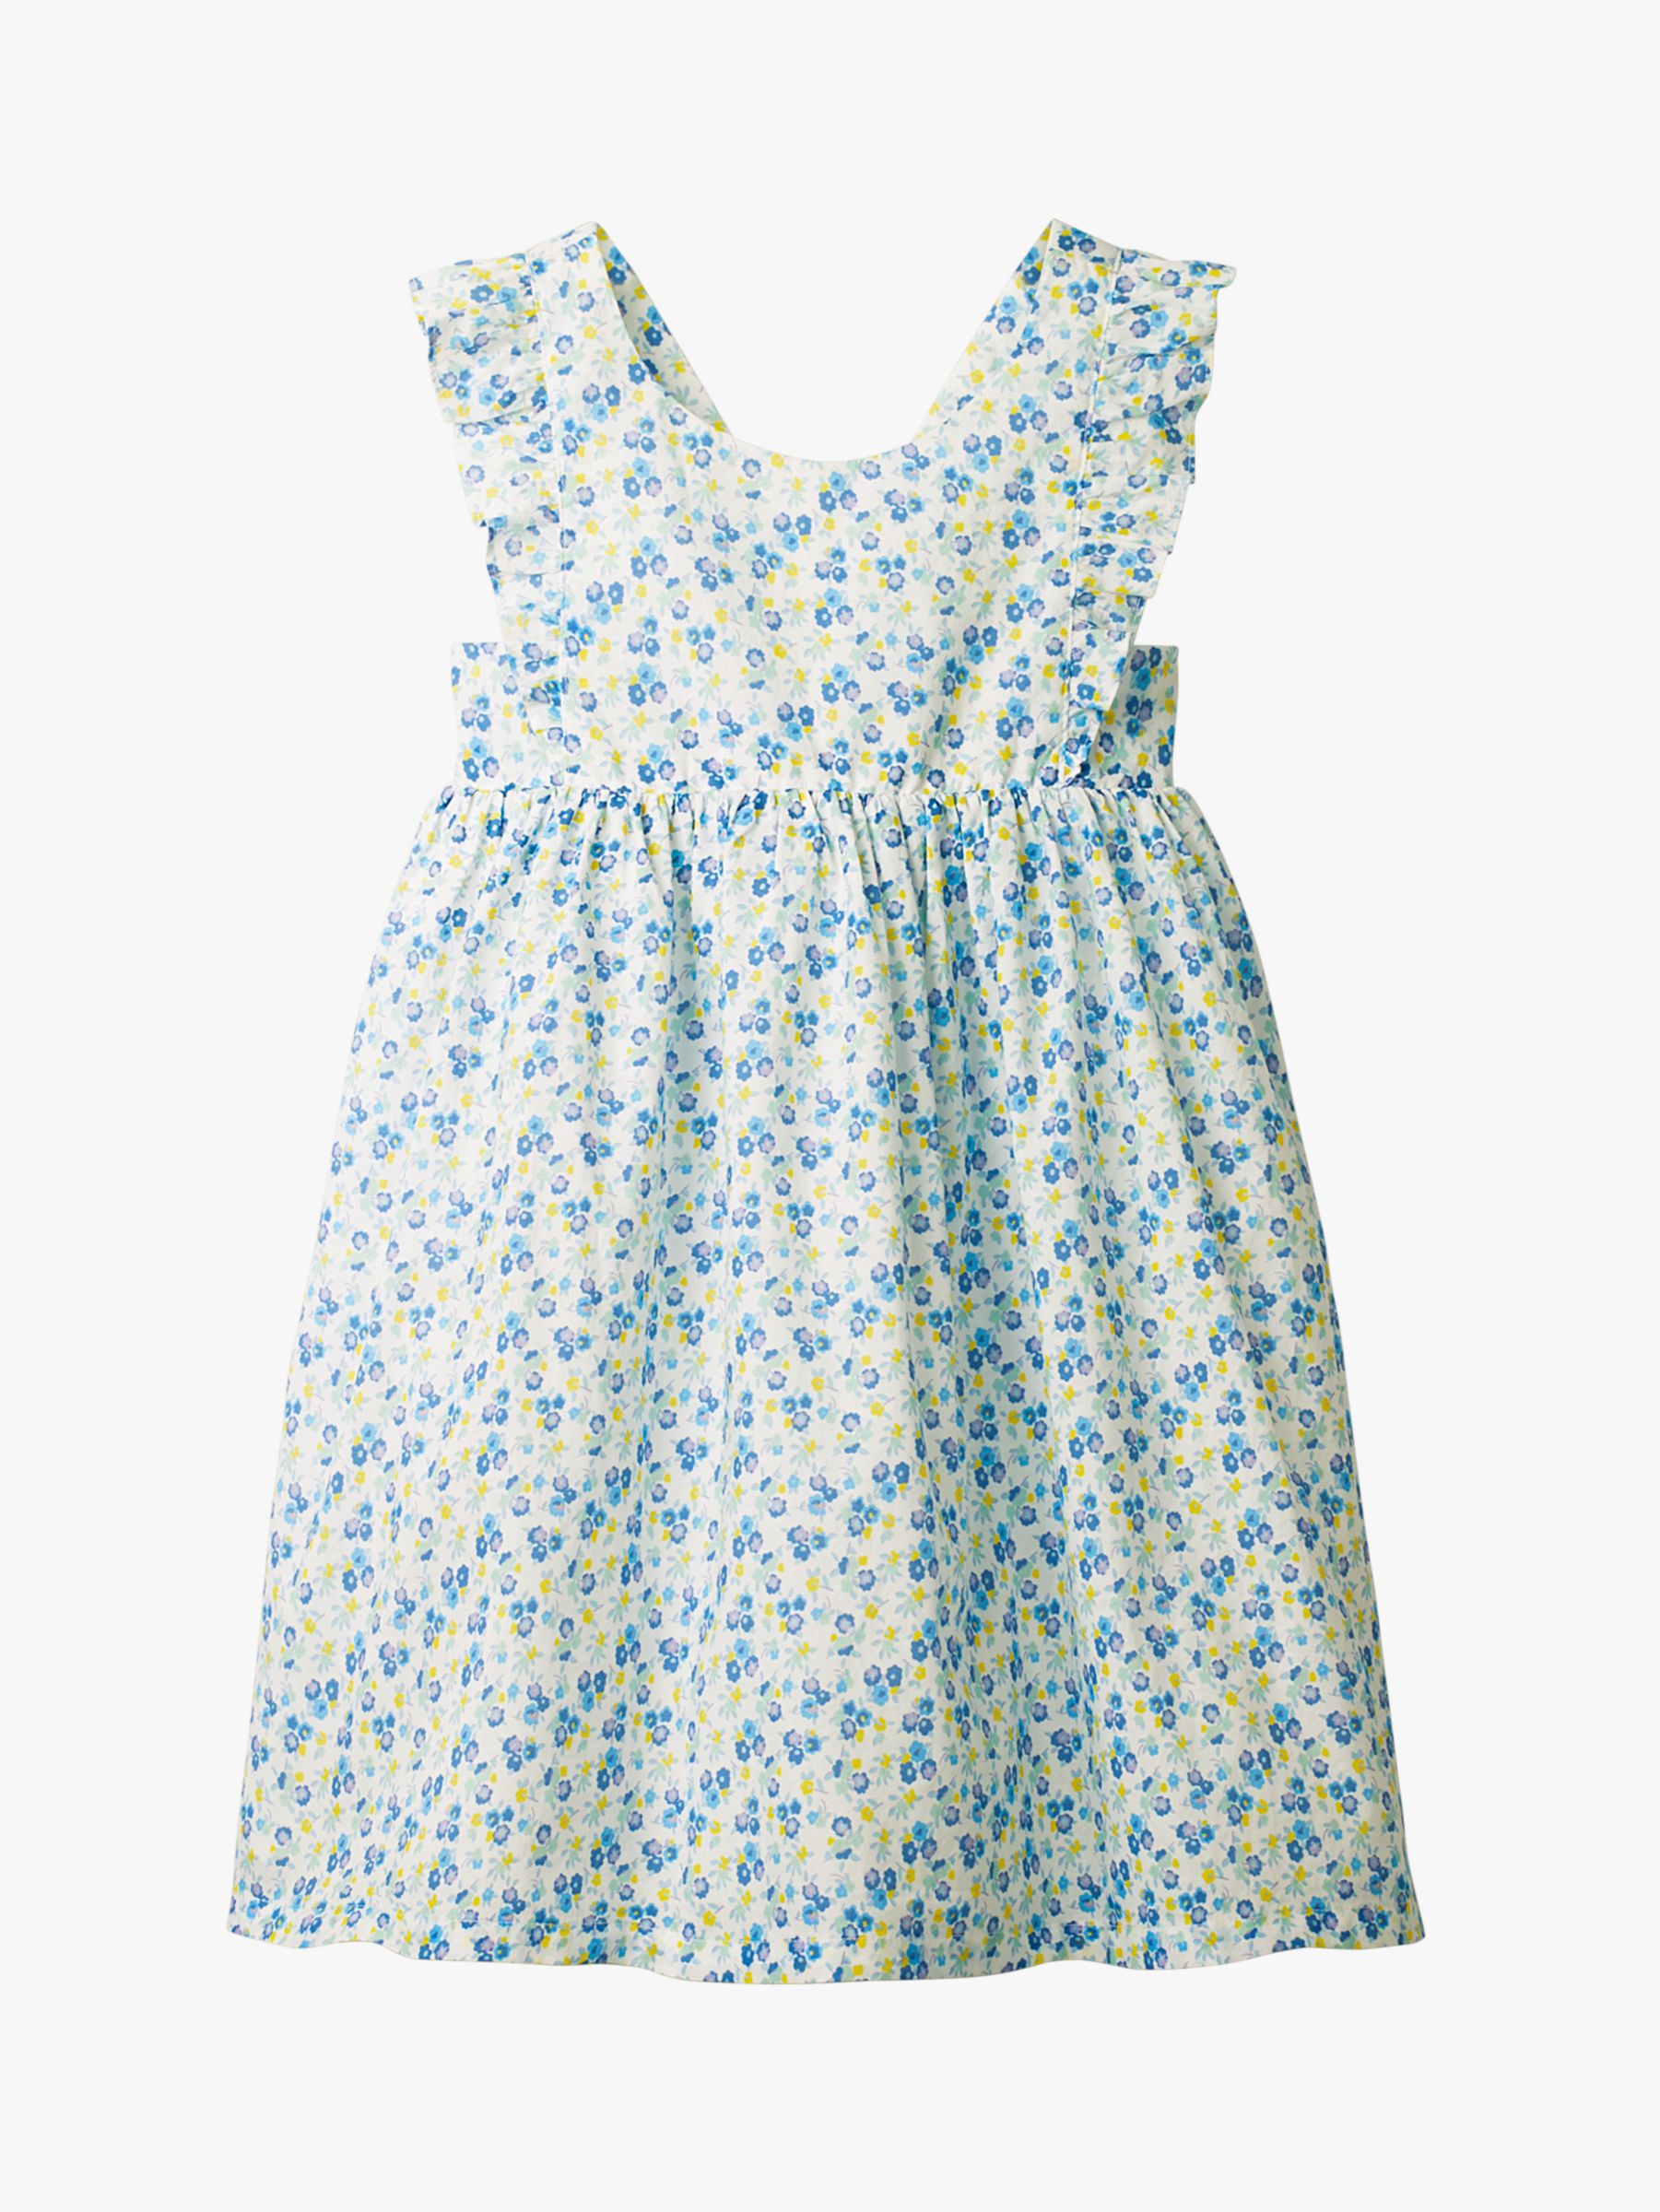 Mini Boden Girls' Strappy Floral Dress, Sky Blue